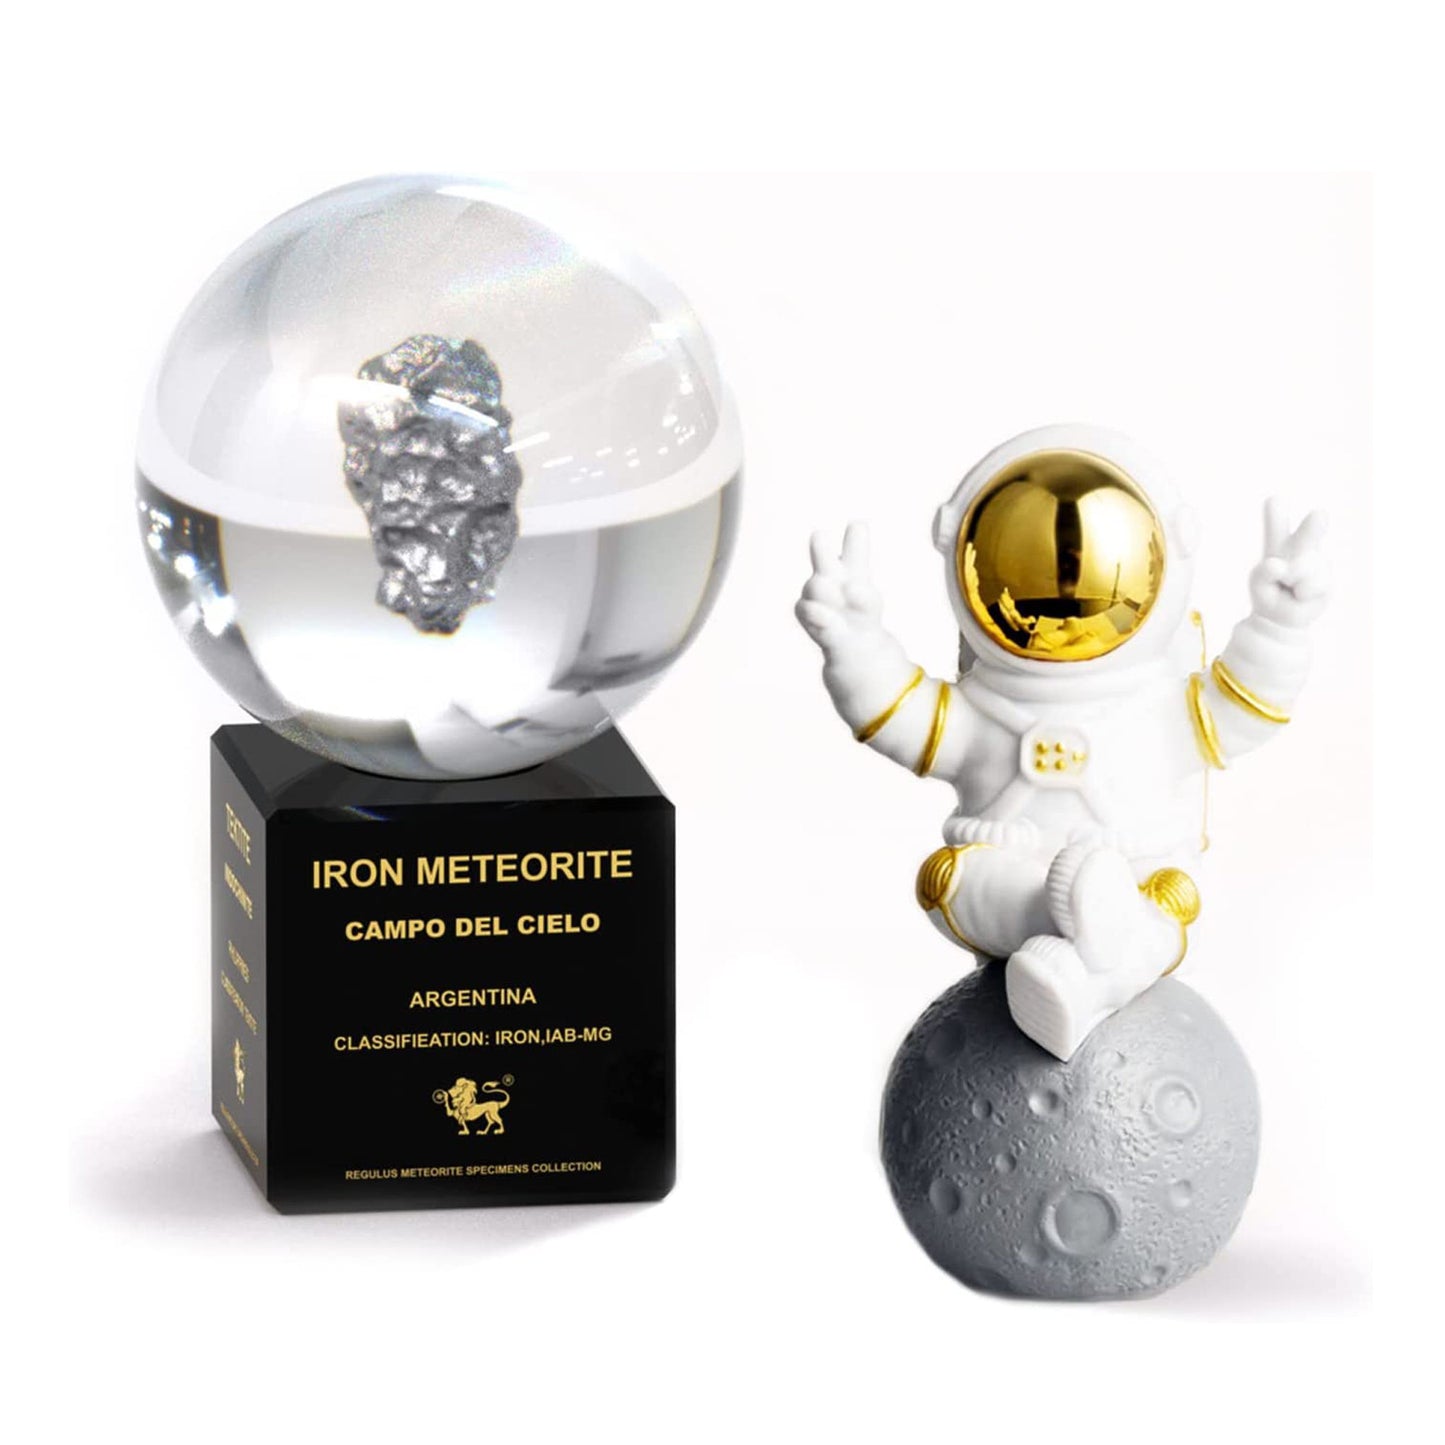 Meteorite Specimen crystal ball and Astronaut Model,Desktop Decoration,Natural Meteorite Gift